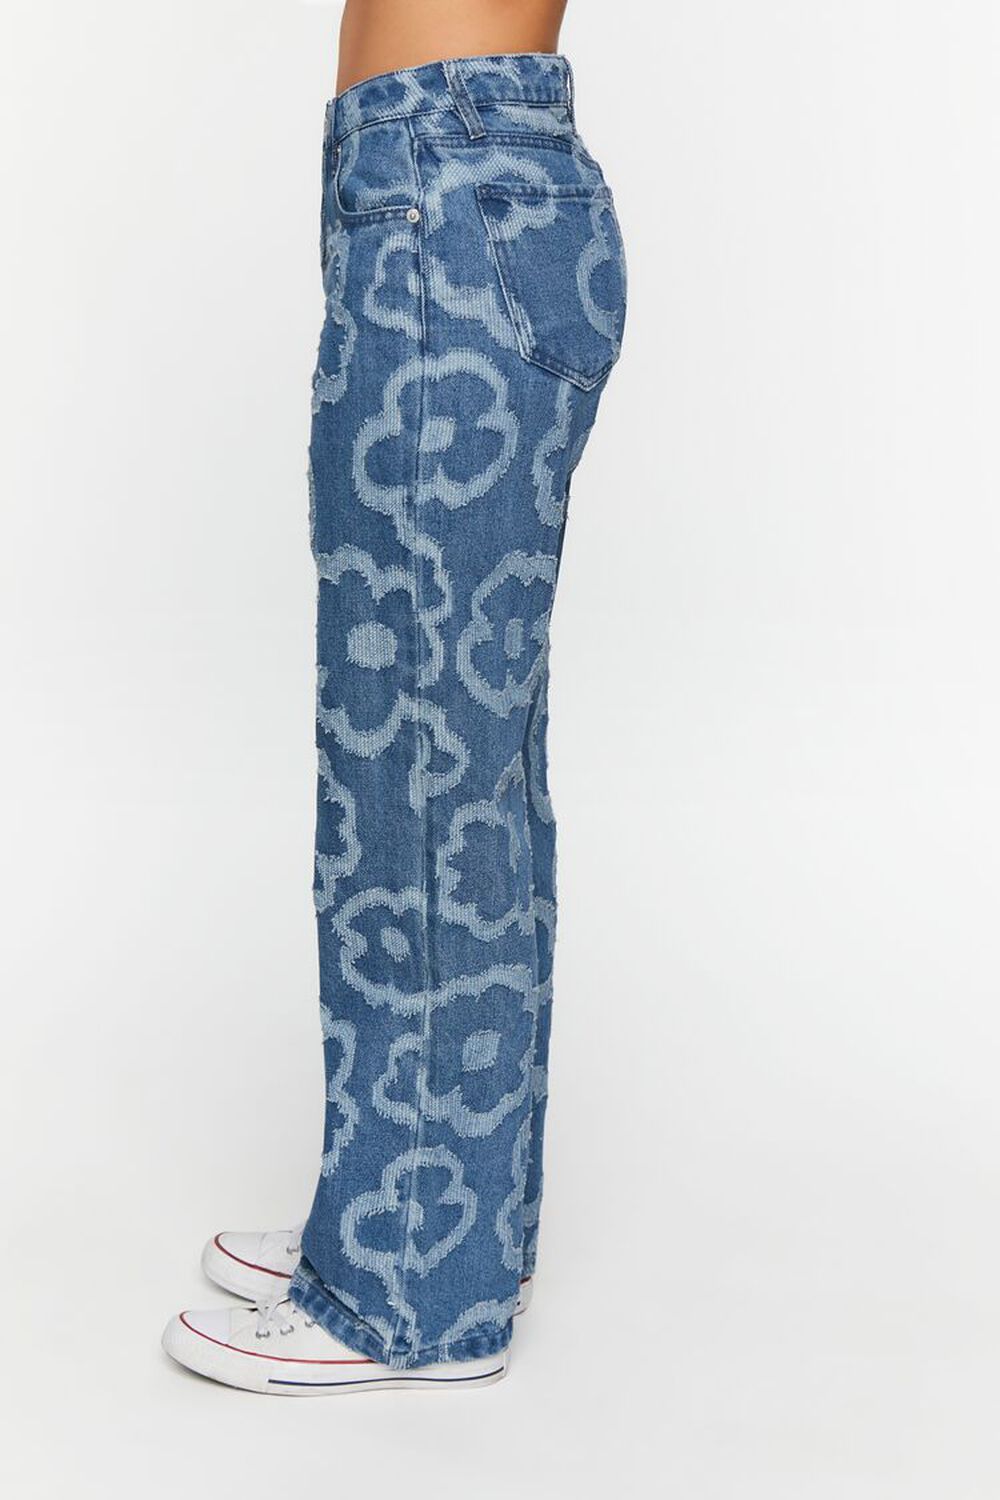 MEDIUM DENIM Textured Floral Print 90s-Fit Jeans, image 2